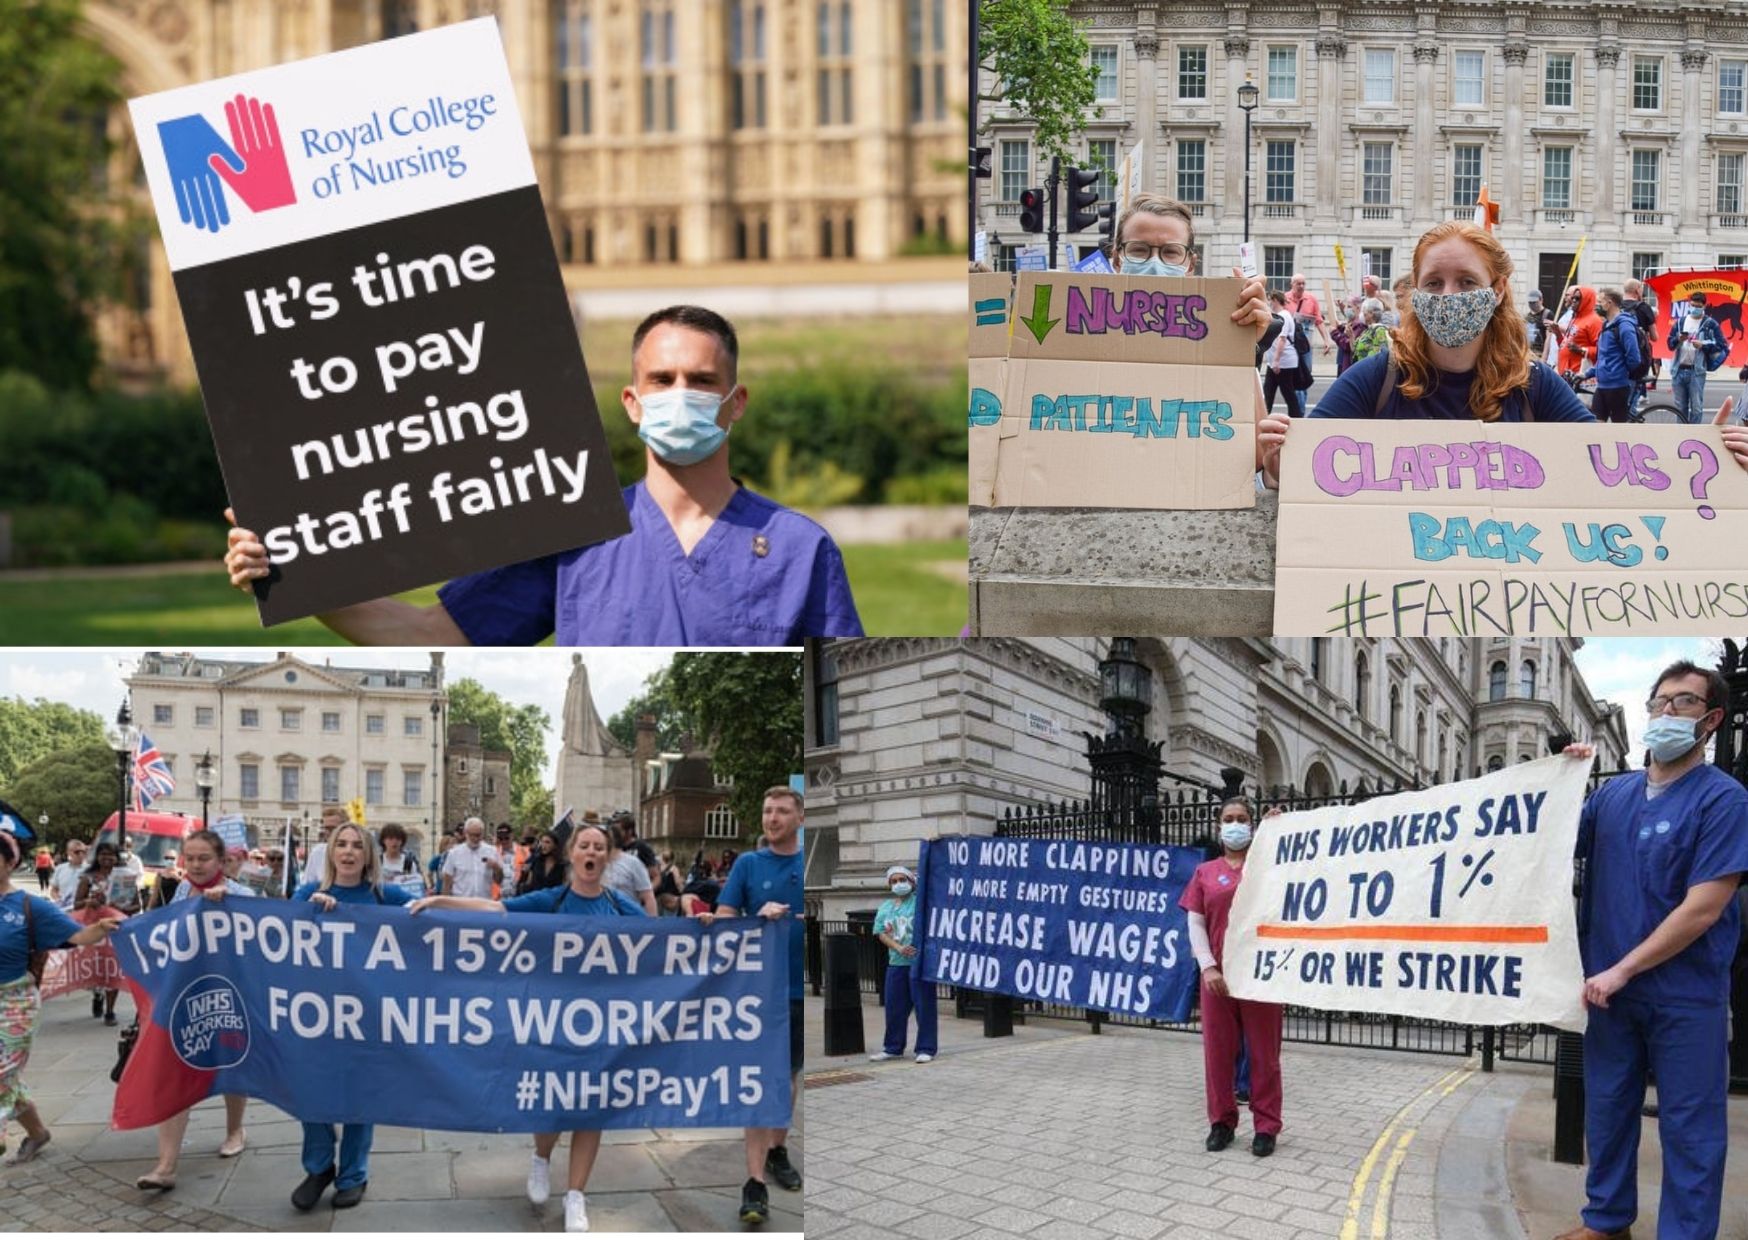 NHS 3% pay raise